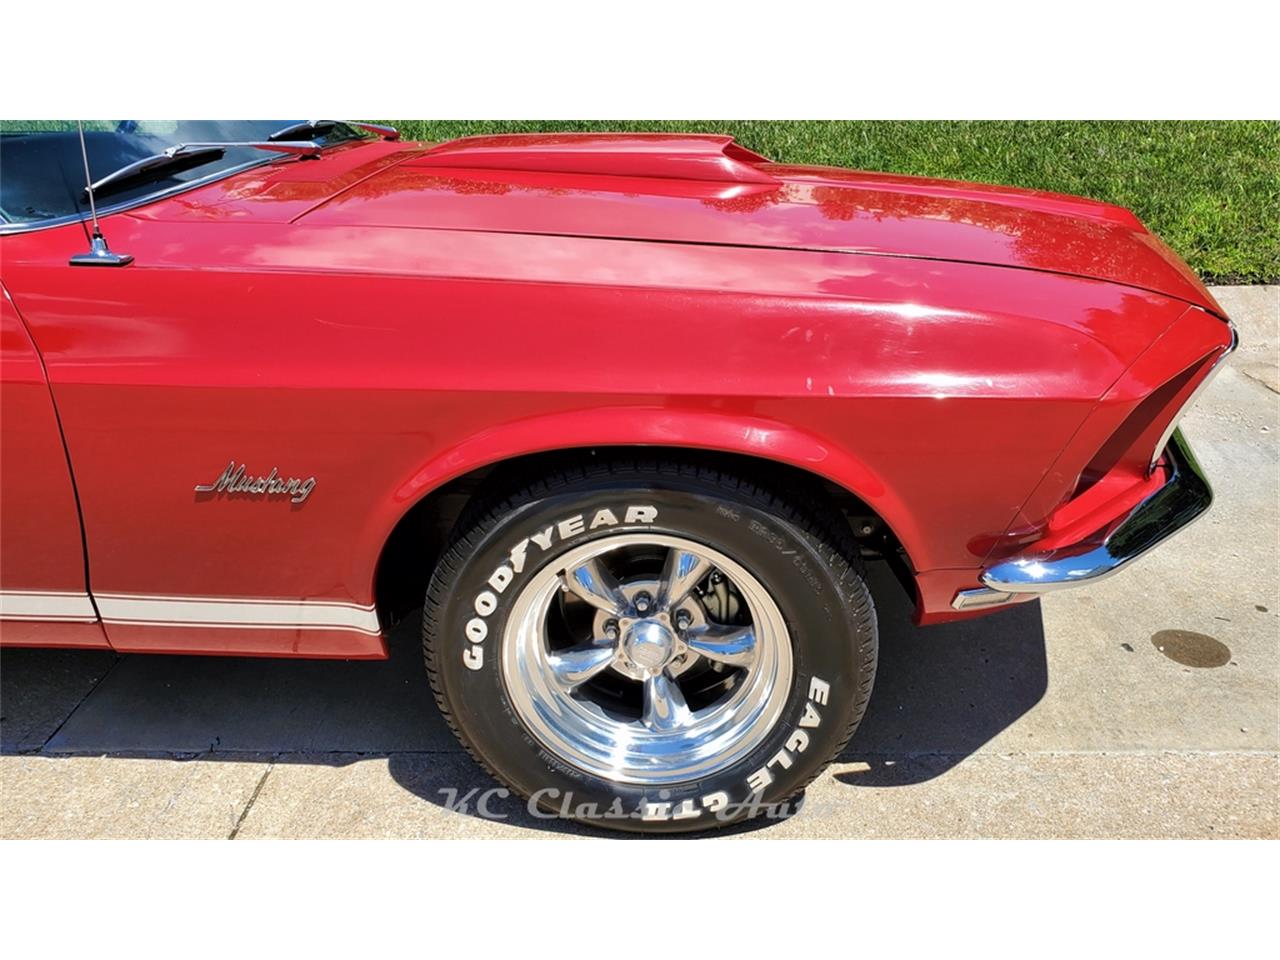 Ford Mustang 302 v8 1969 prix tout compris